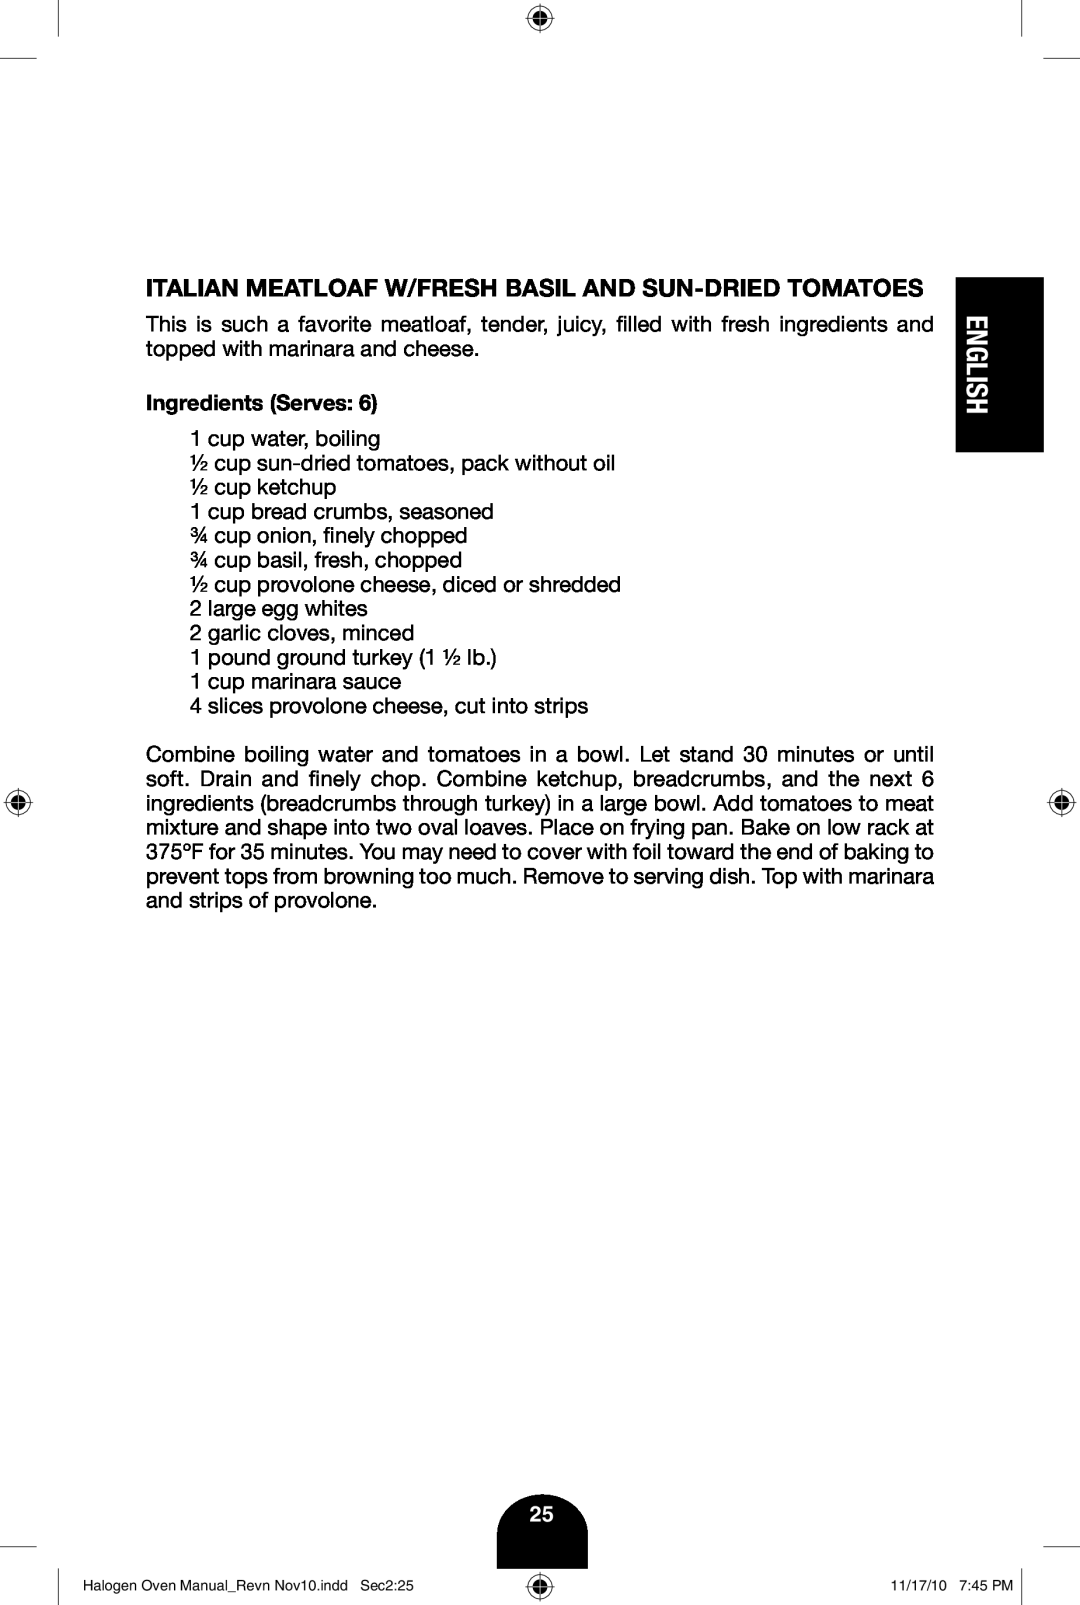 Fagor America 670040380 user manual Italian Meatloaf W/Fresh Basil And Sun-Dried Tomatoes, English 